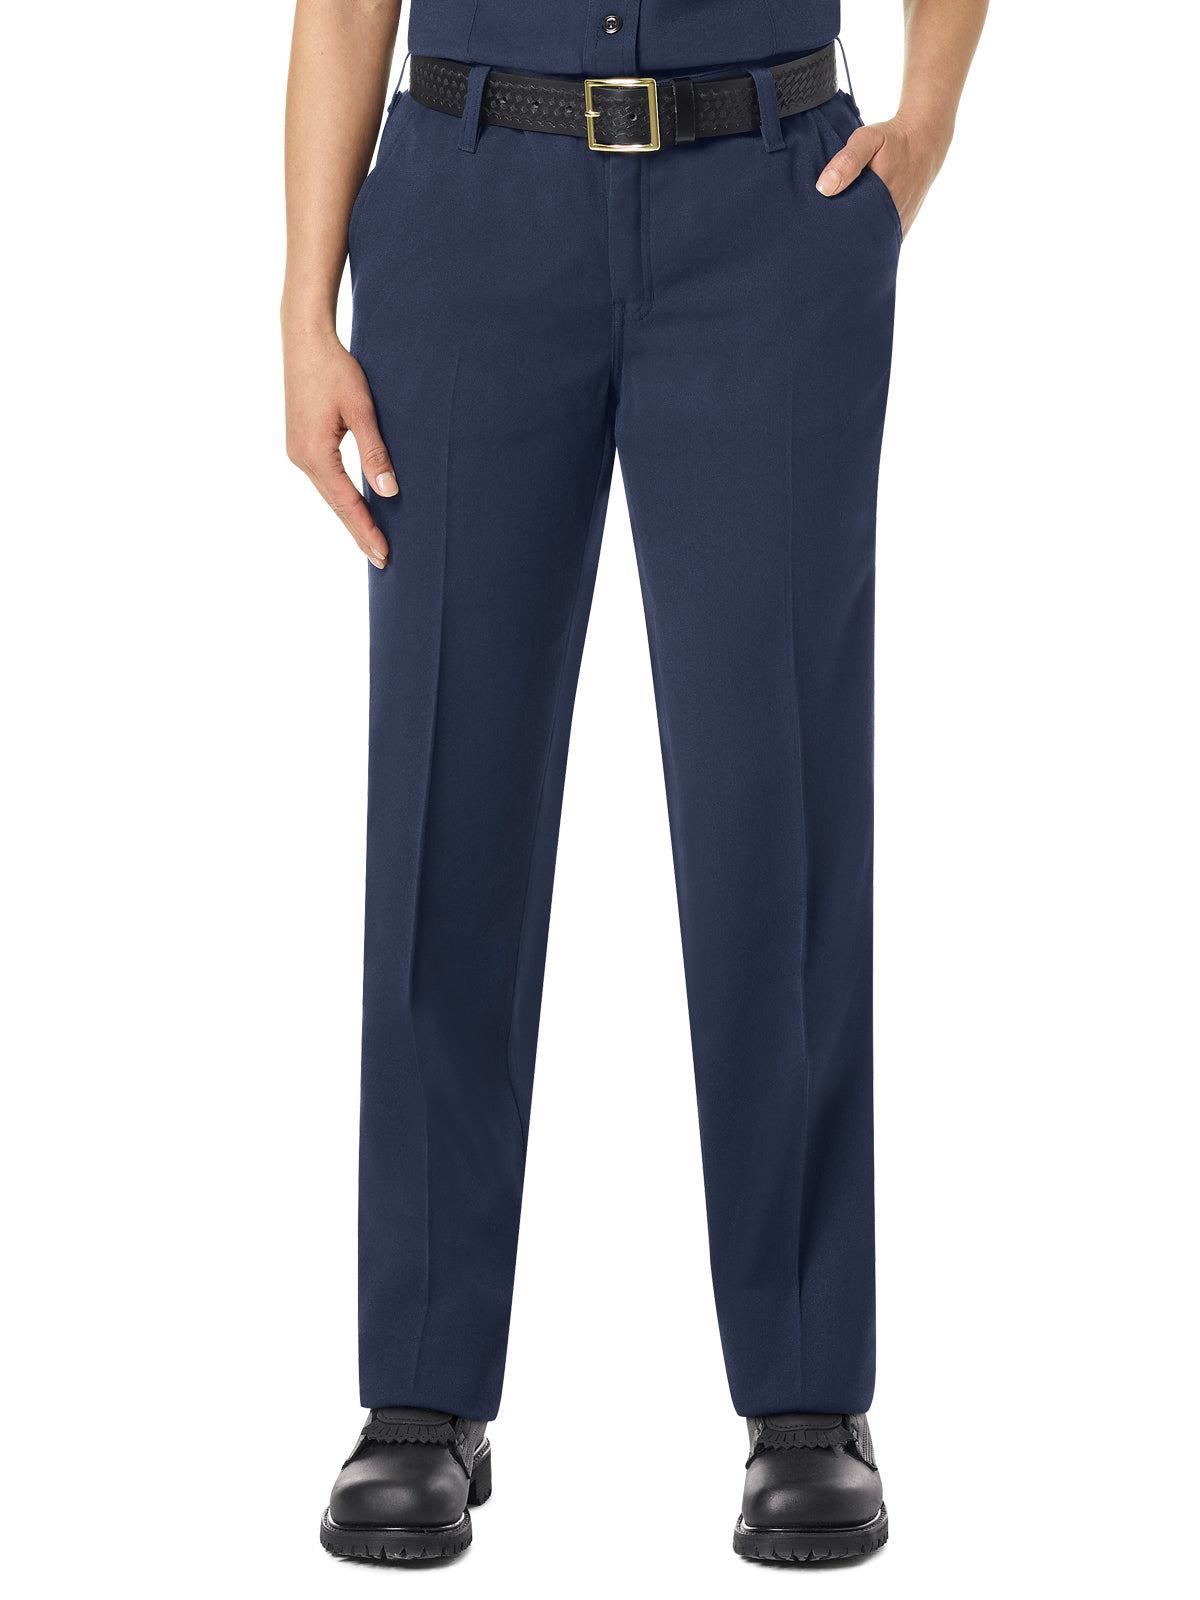 Women's Uniform Pant - FP45 - Navy